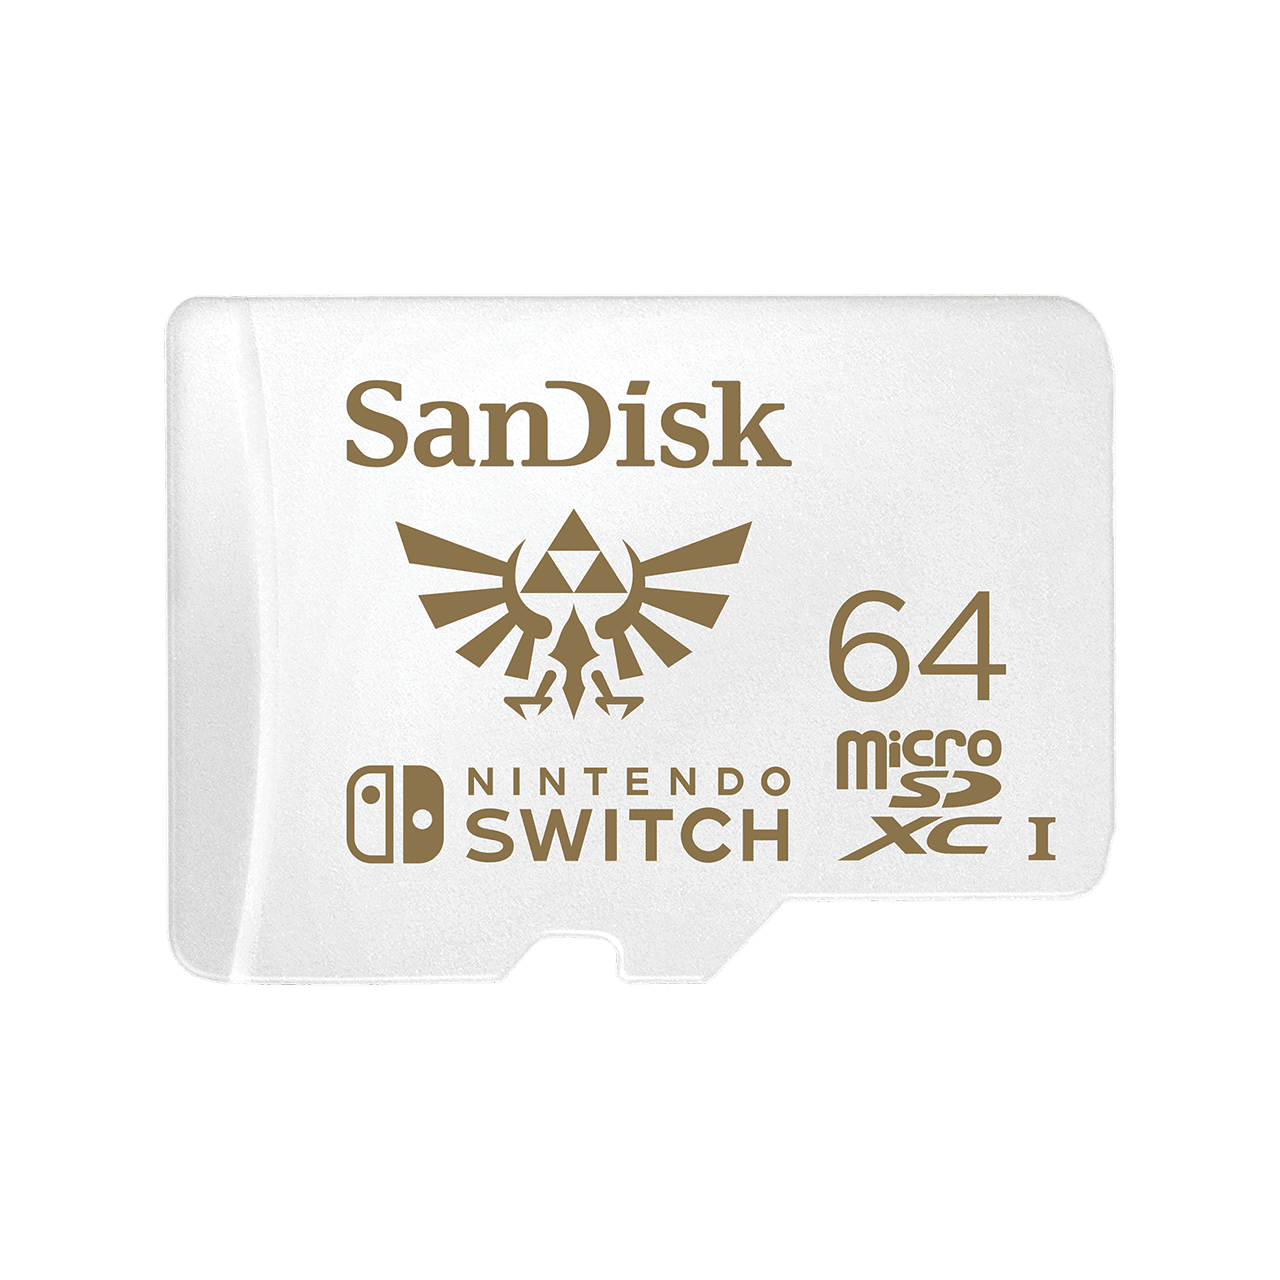 256gb micro sd card nintendo switch